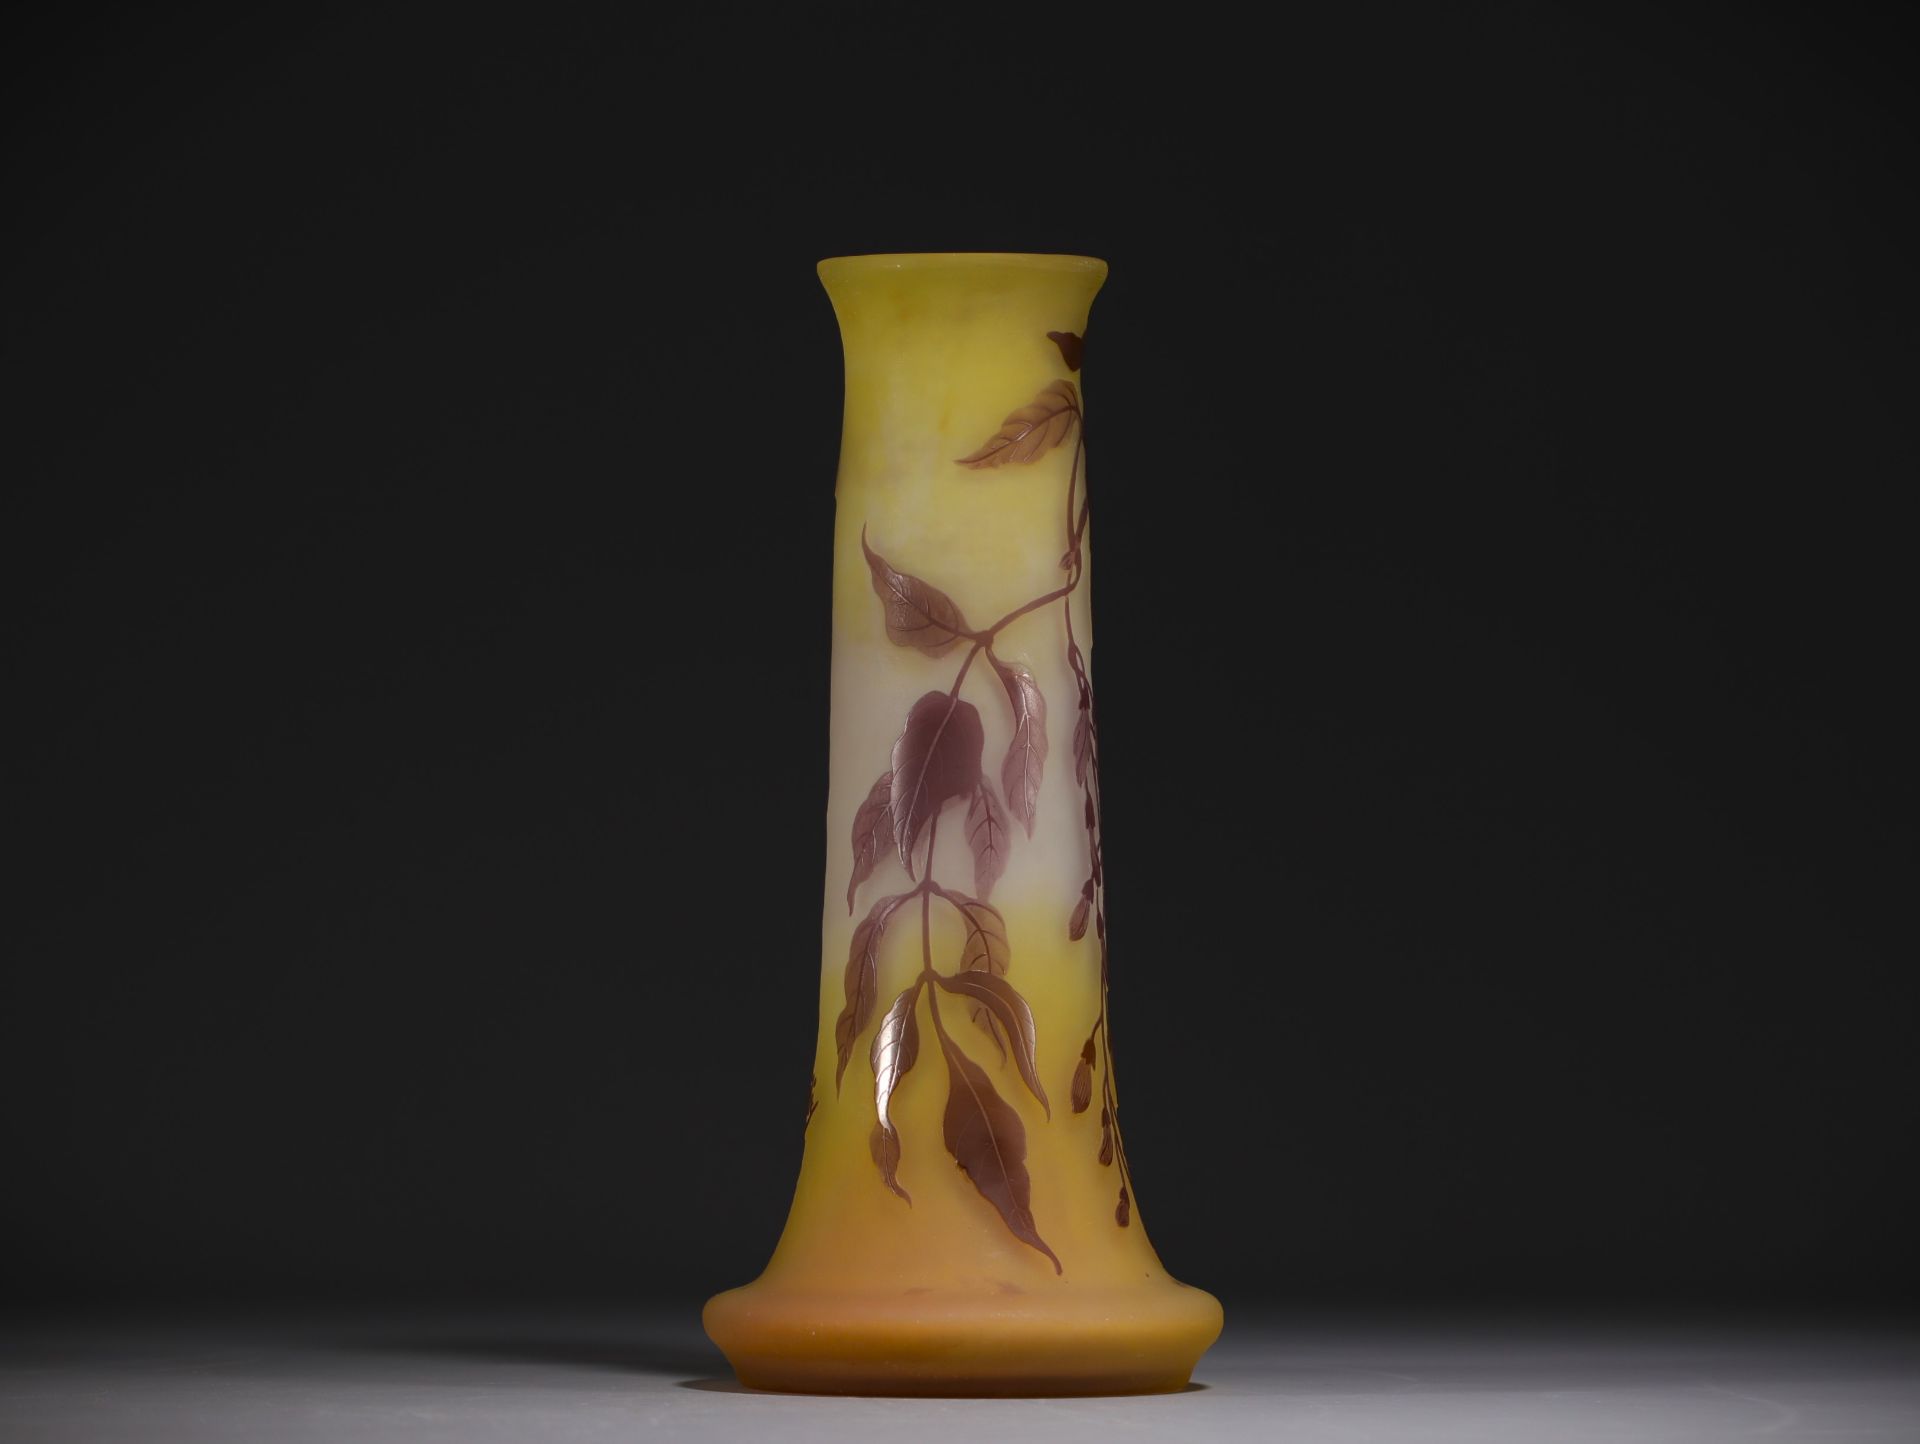 Emile GALLE (1846-1904) Large acid-etched multi-layered glass vase, wisteria design, signed. - Image 4 of 4